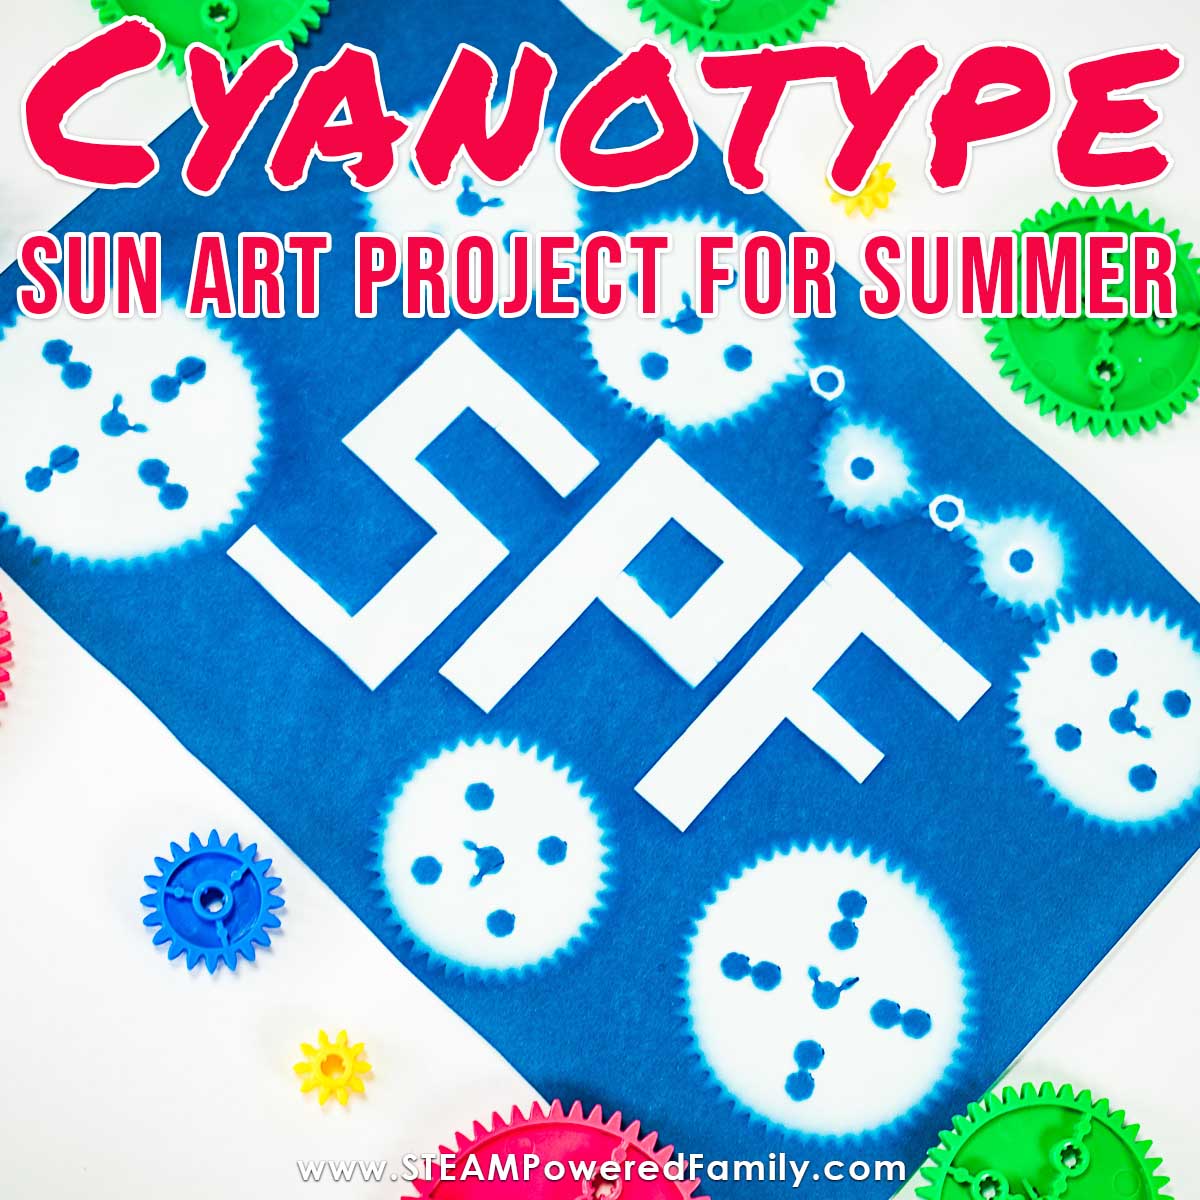 Sun Art – Cyanotype STEAM Project